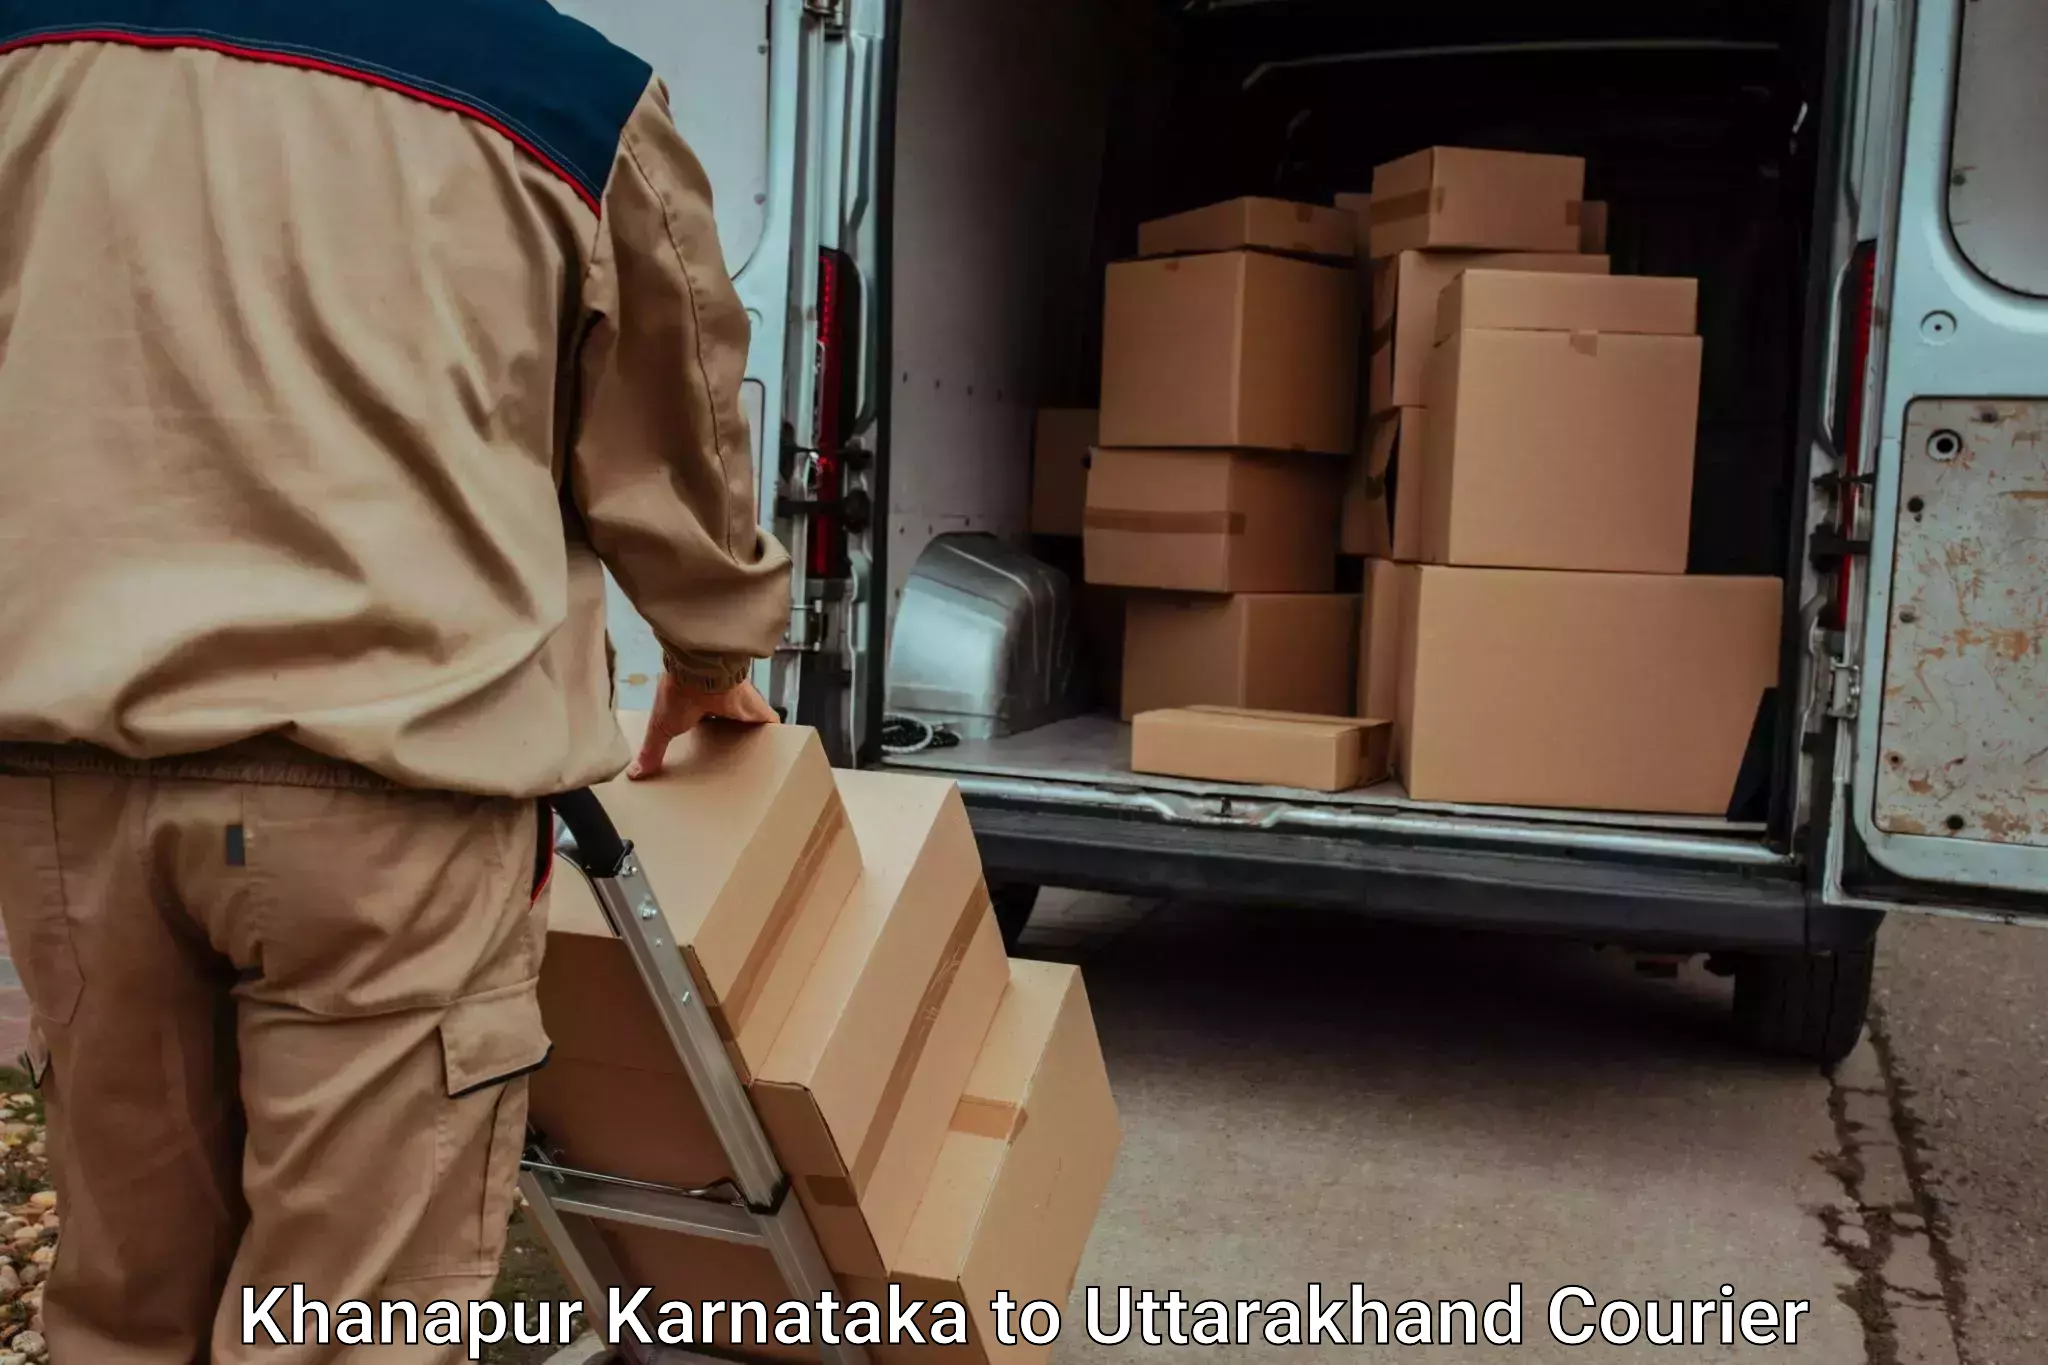 Same day luggage service Khanapur Karnataka to Someshwar